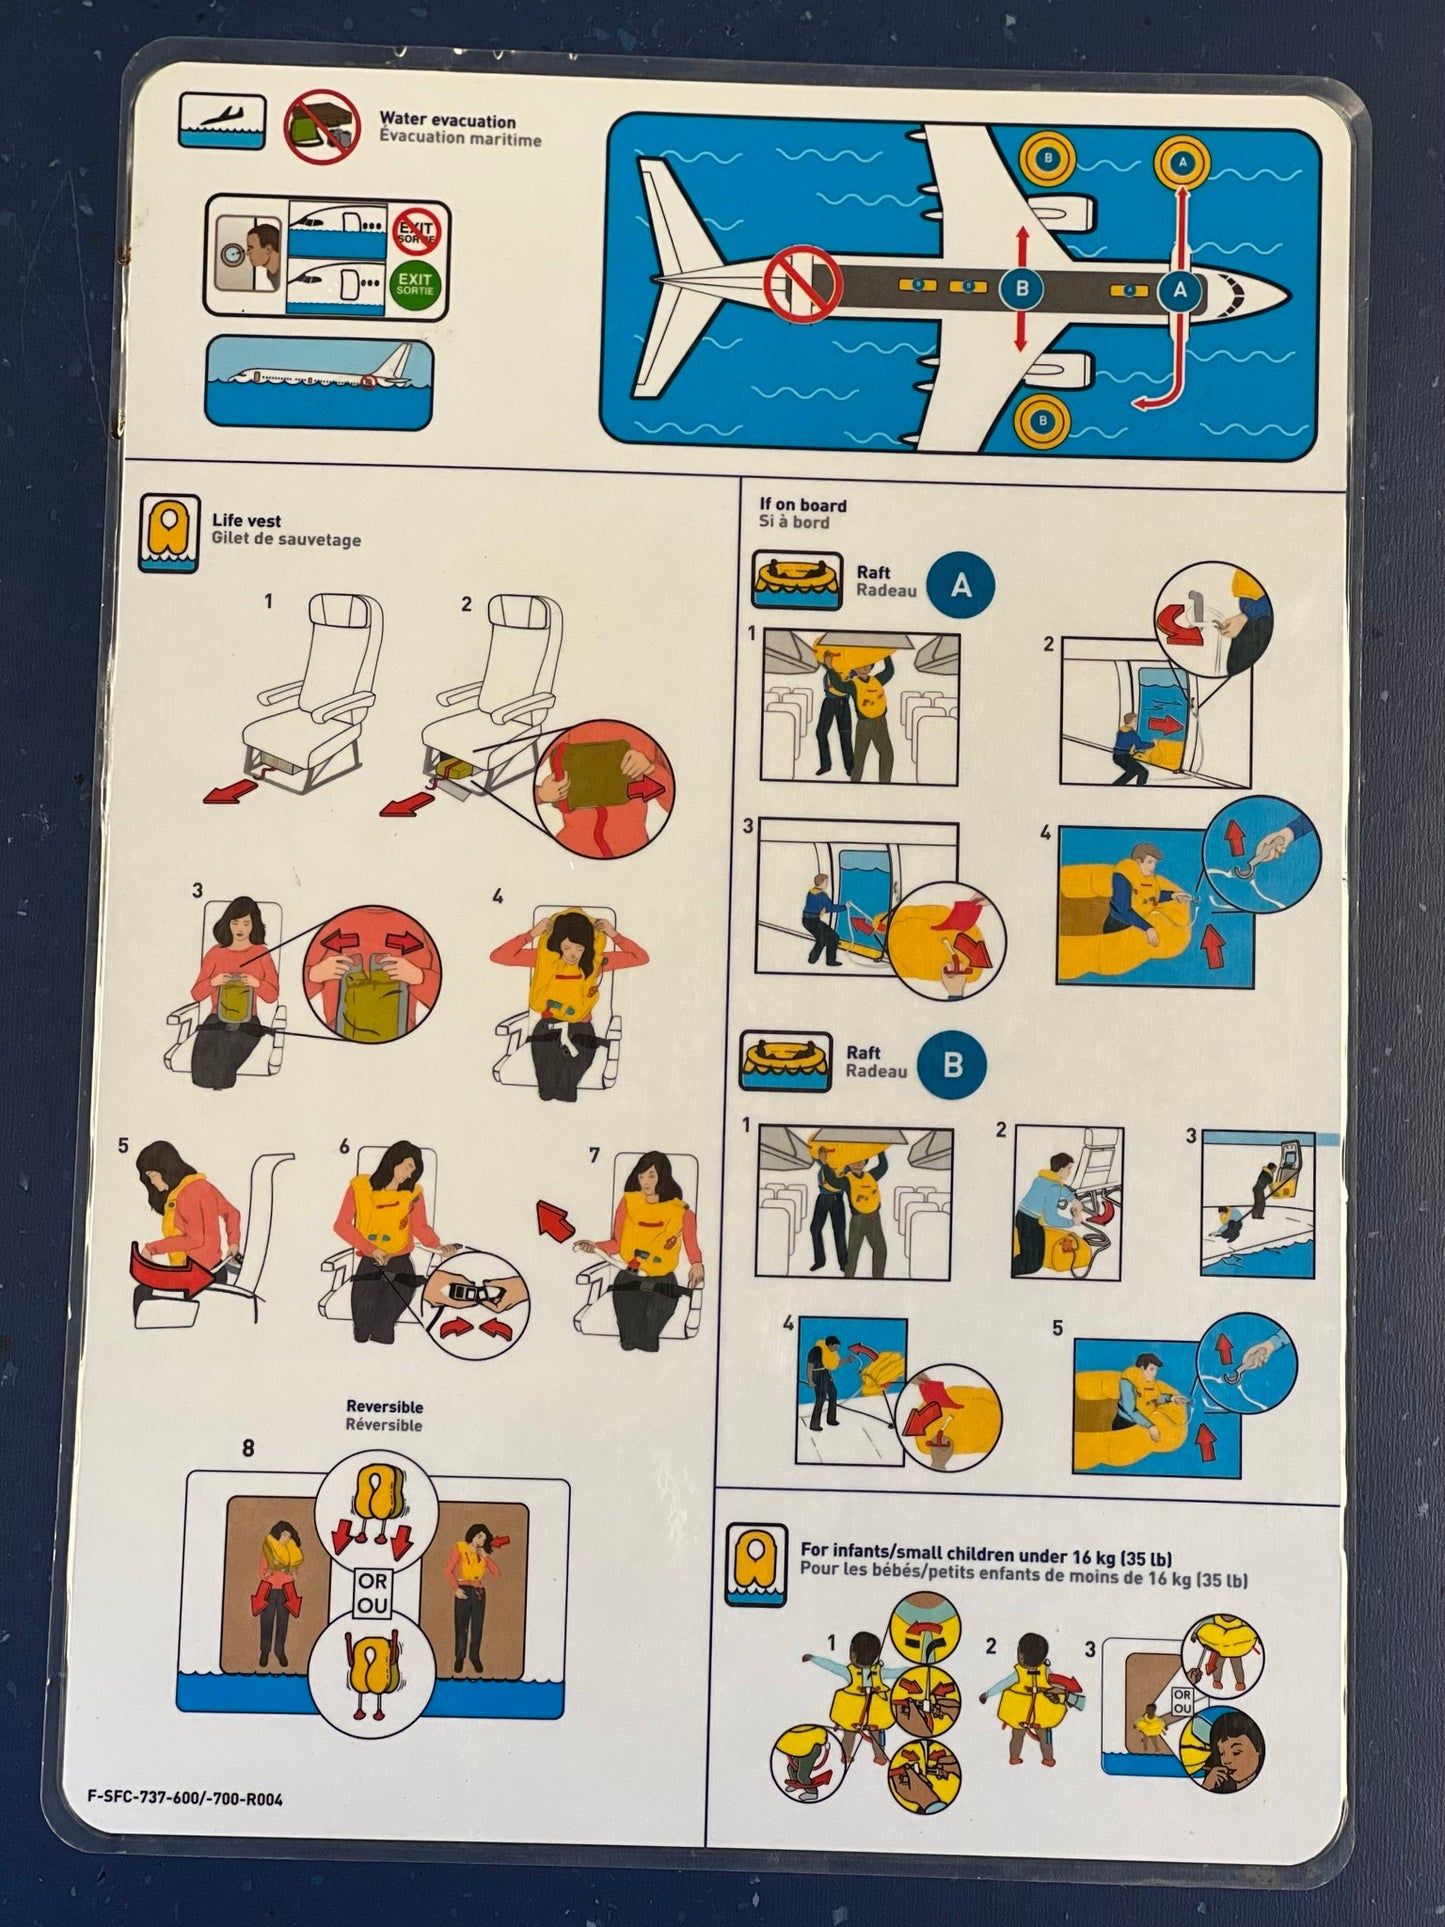 WestJet Emergency Evacuation Guide for 737-600/-700